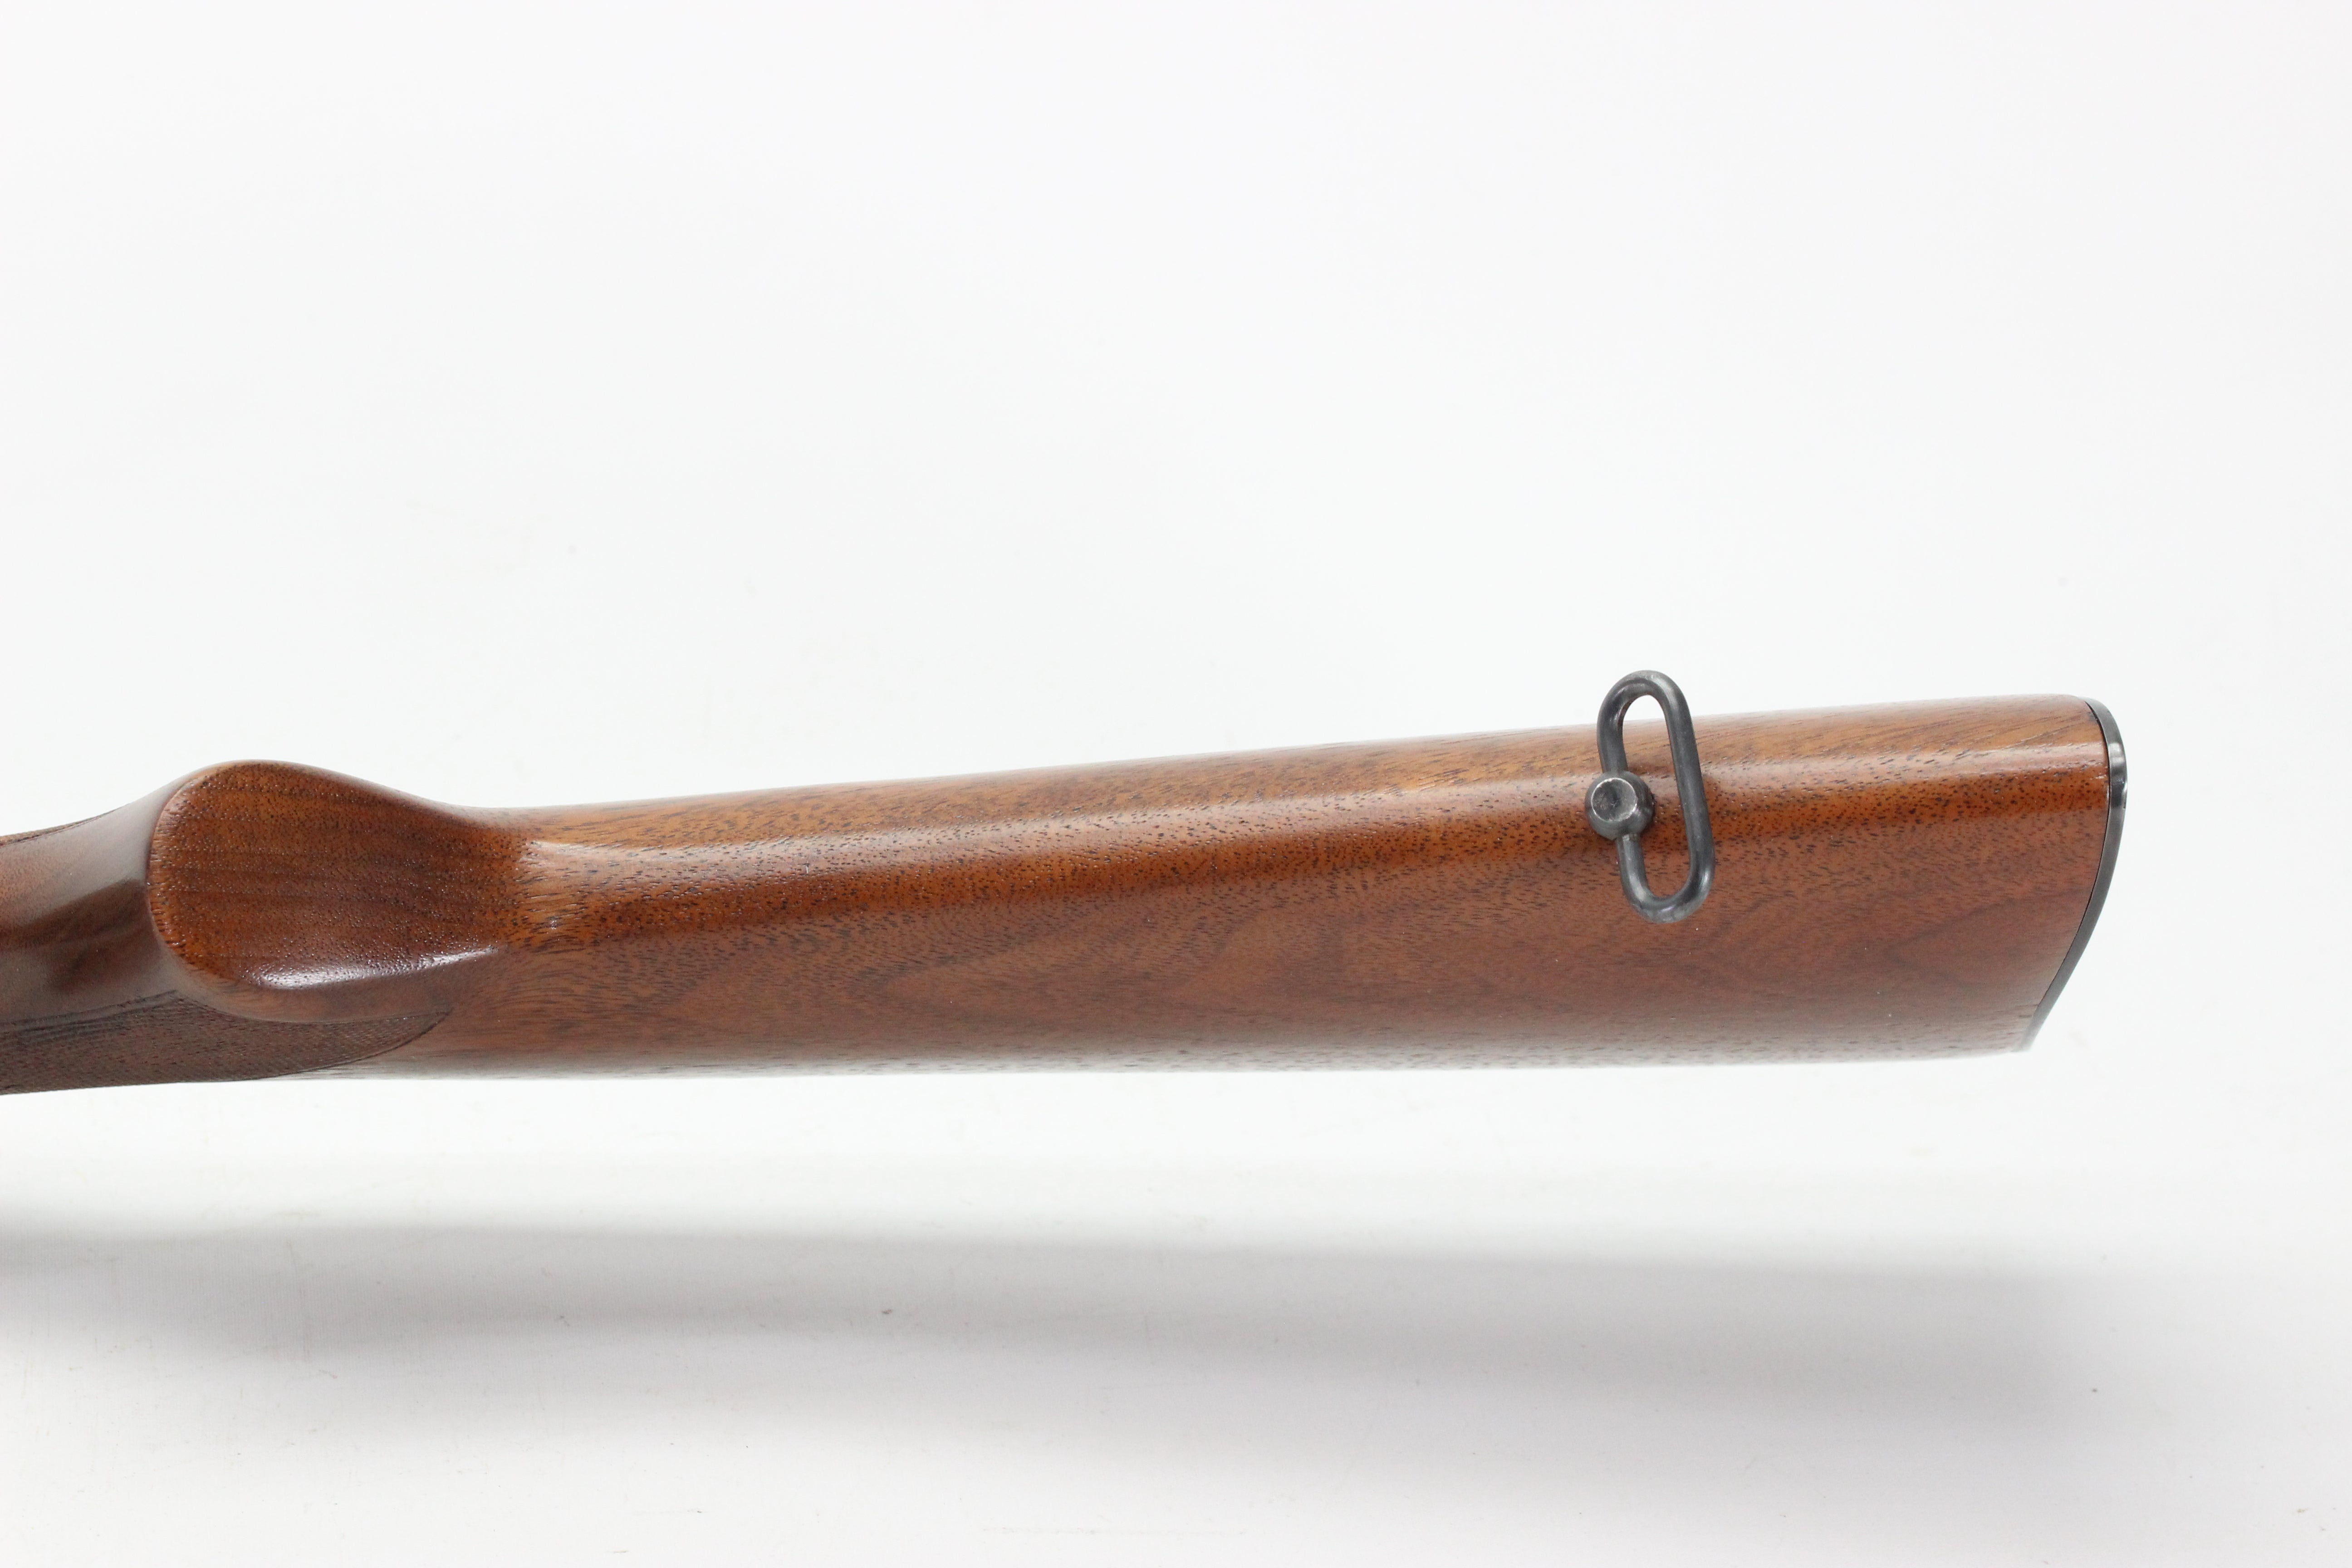 .257 Roberts Standard Rifle - 1950